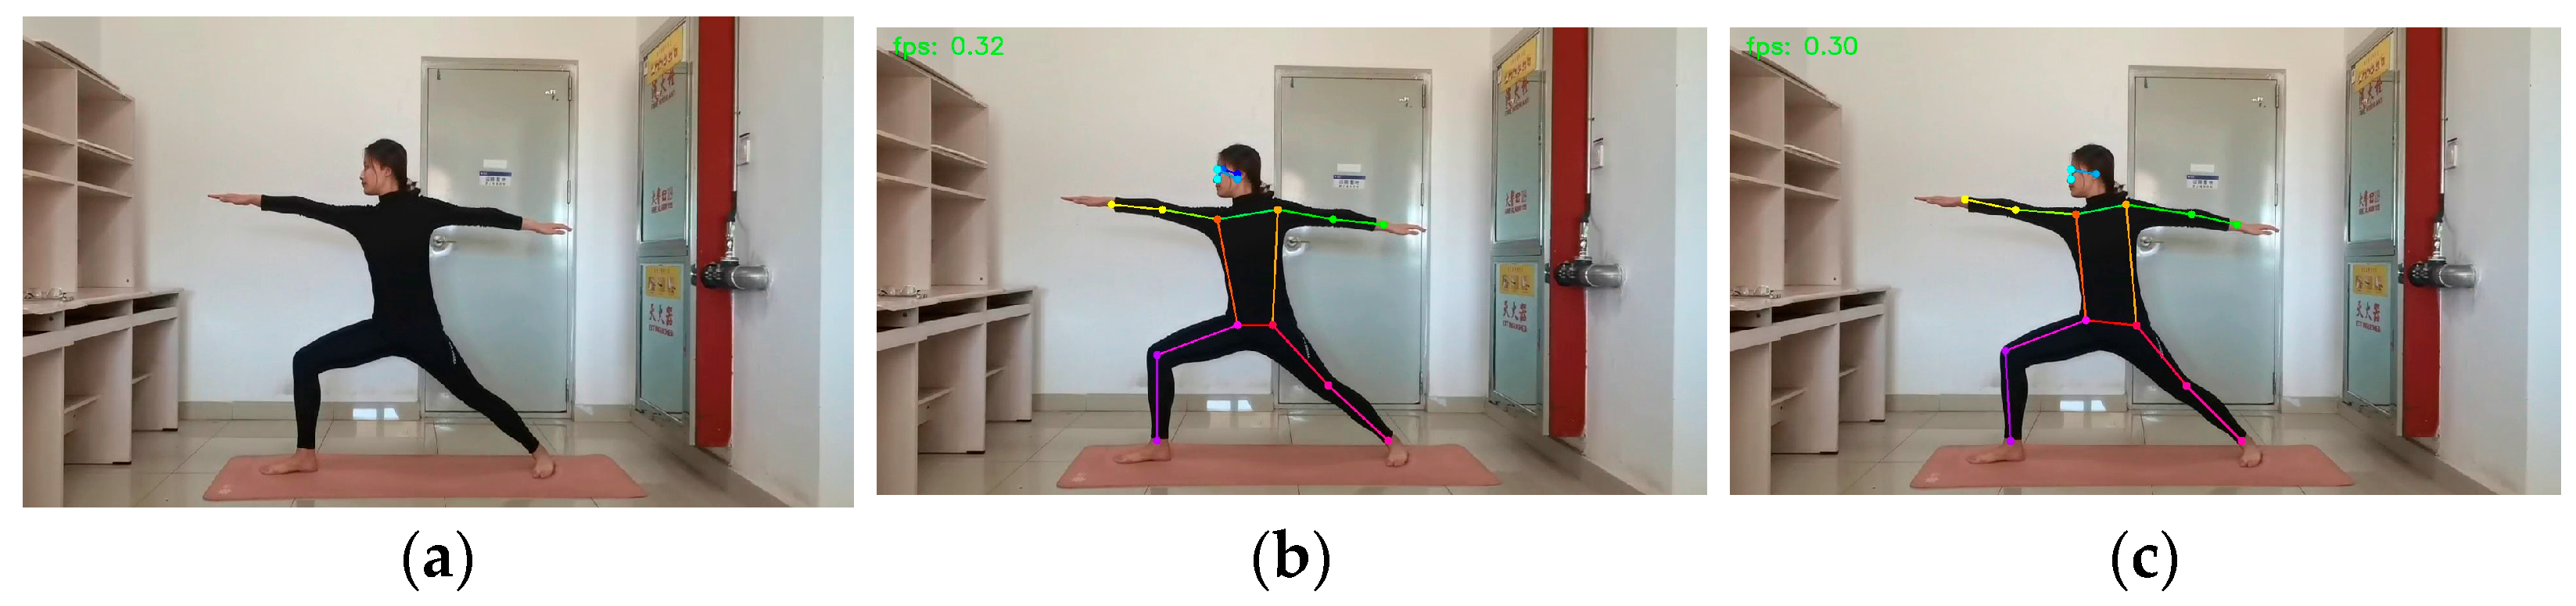 An Improved High-Resolution Network-Based Method for Yoga-Pose Estimation